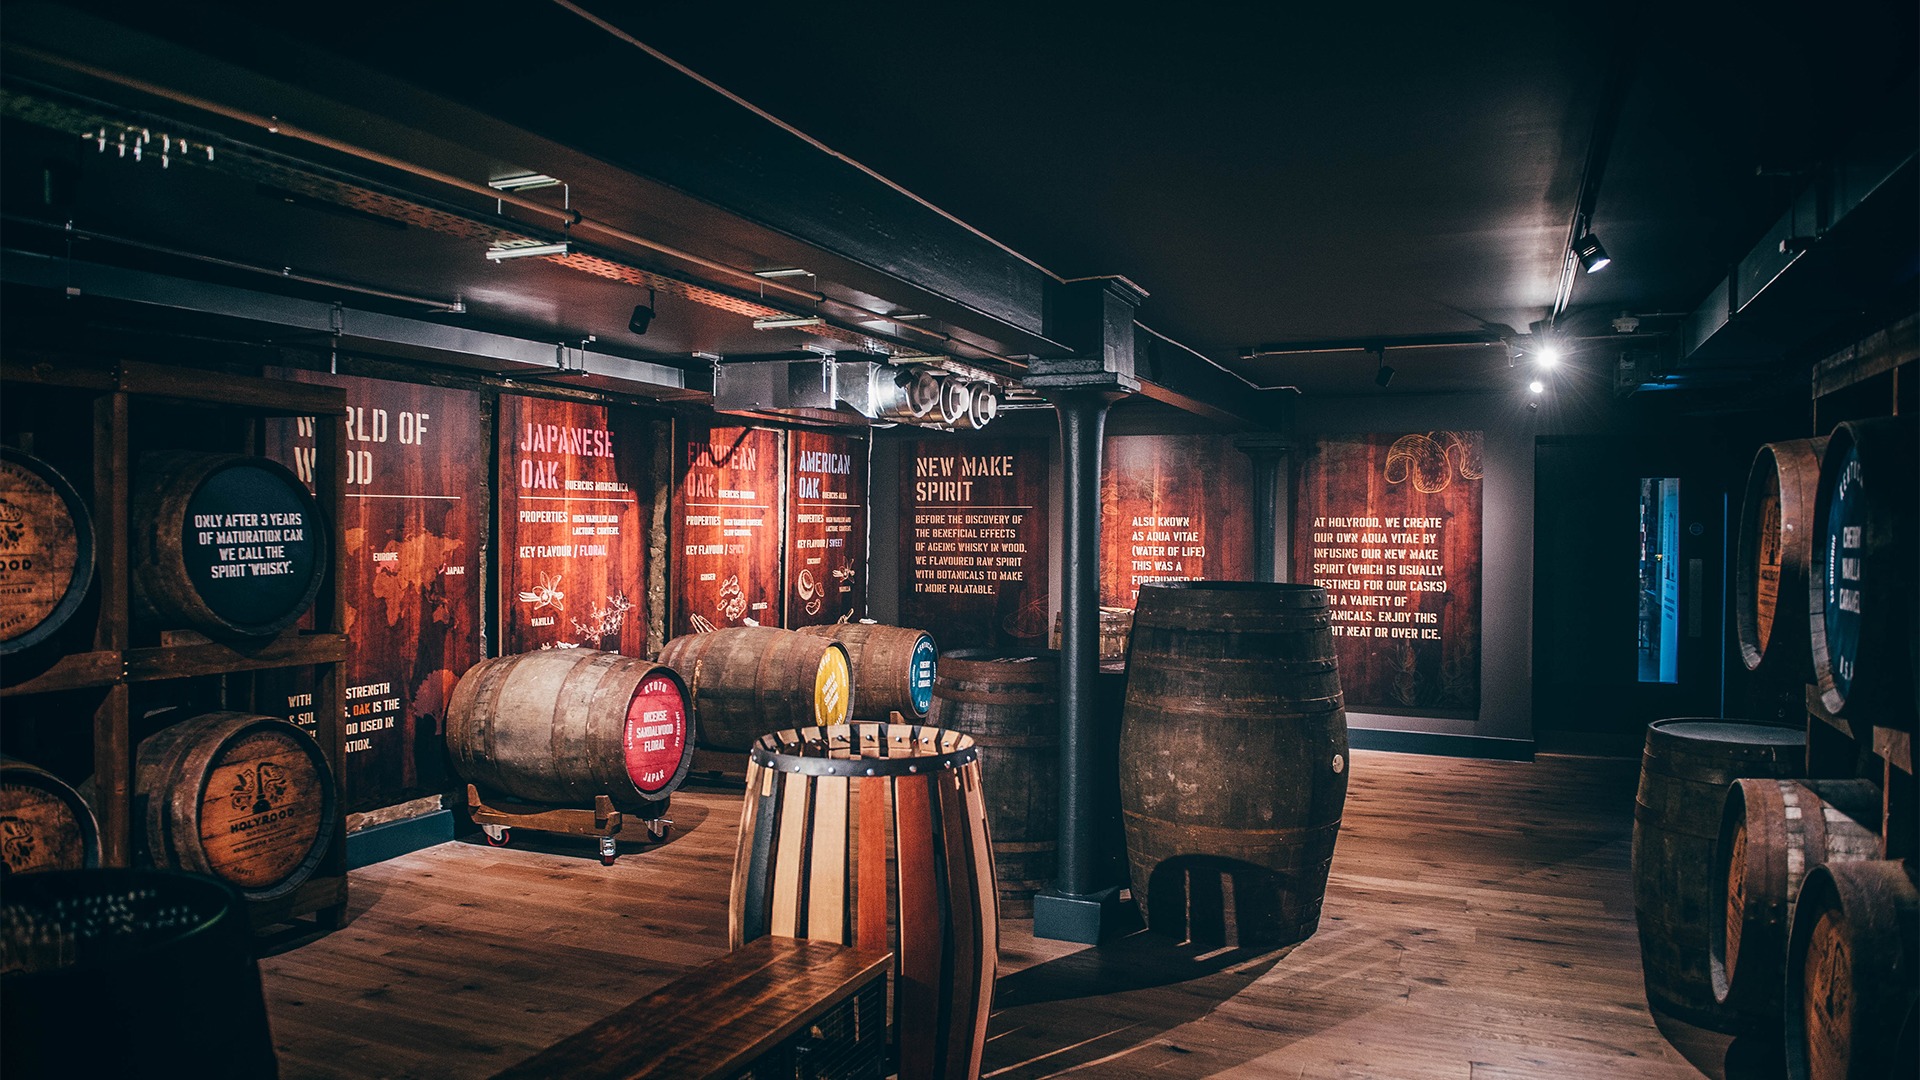 Edinburgh first single malt whisky distillery in nearly 100 years! 4